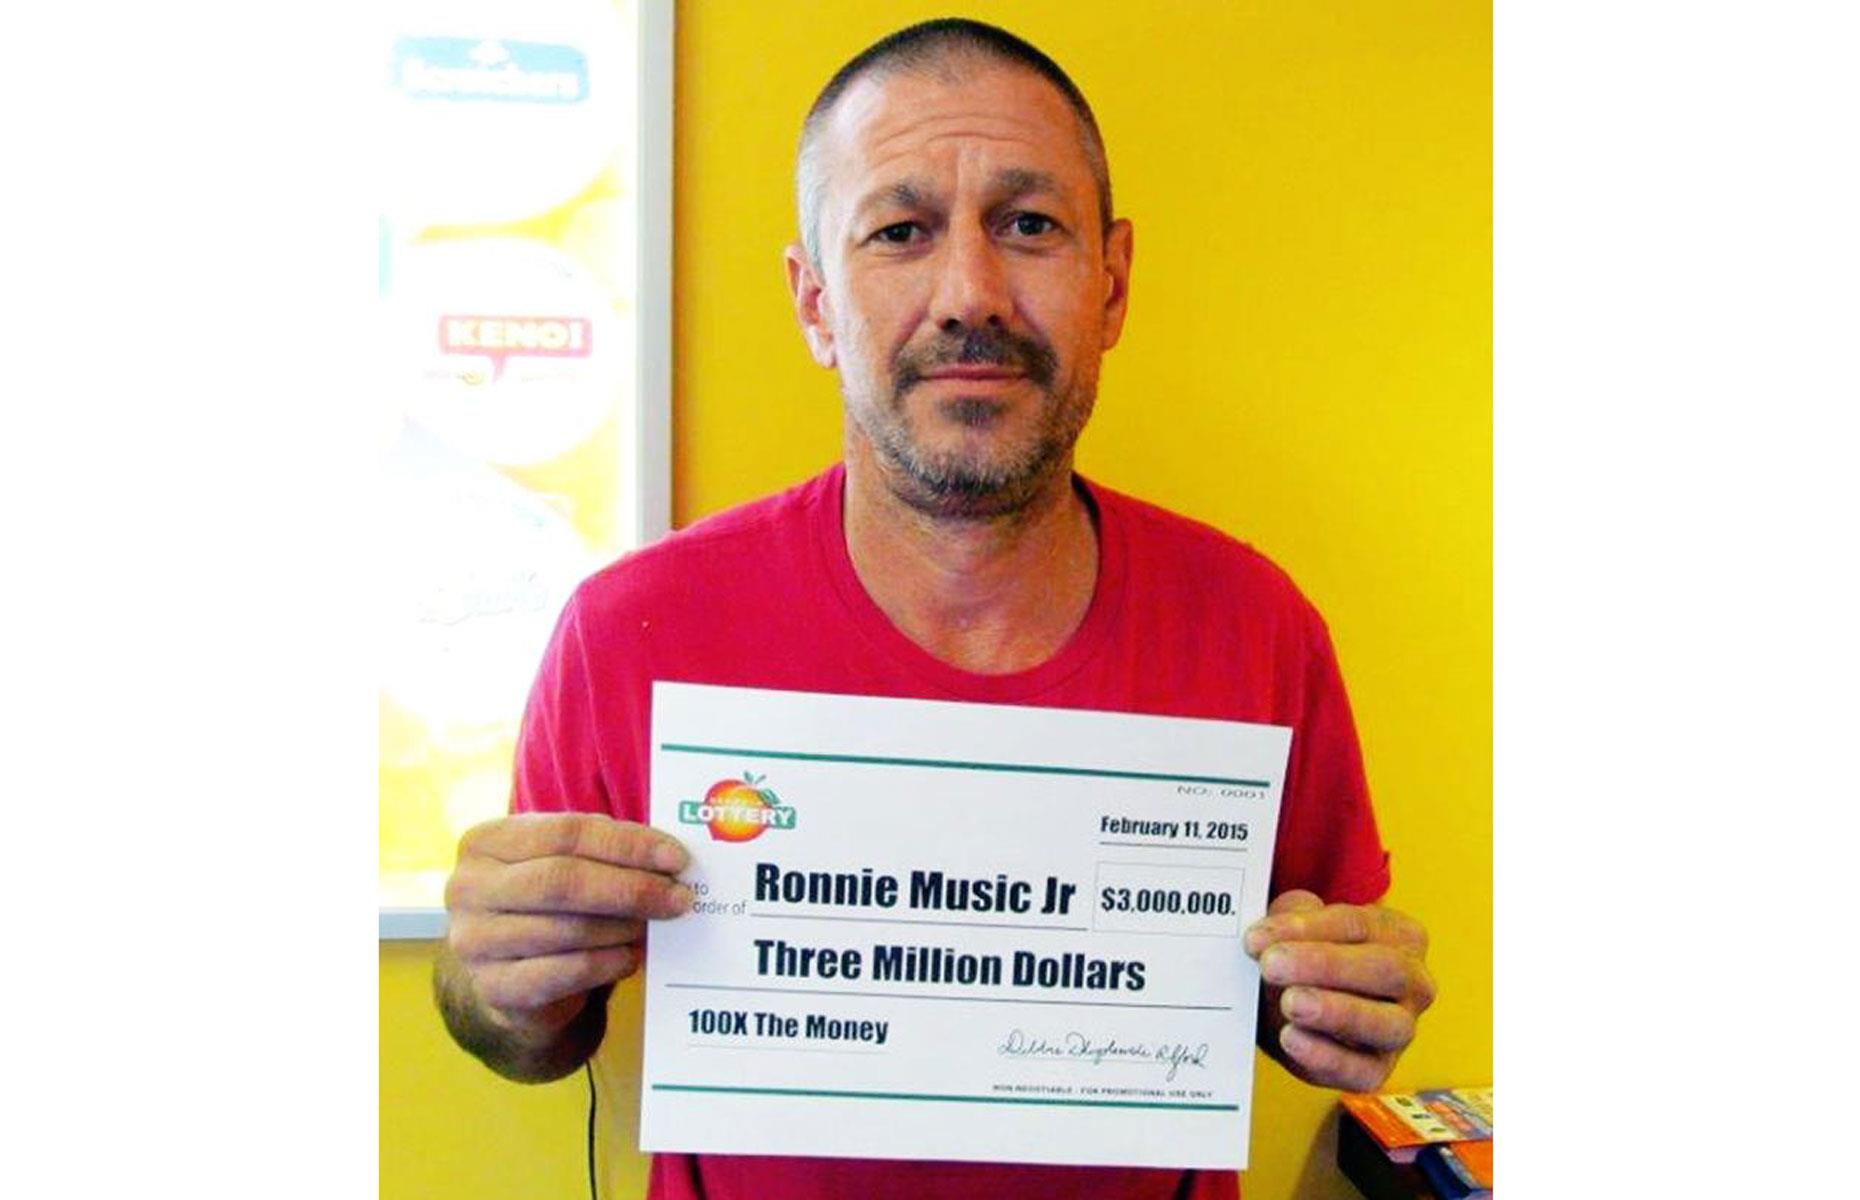 Ronnie Music Jr, winnings: $3 million (£1.9m)